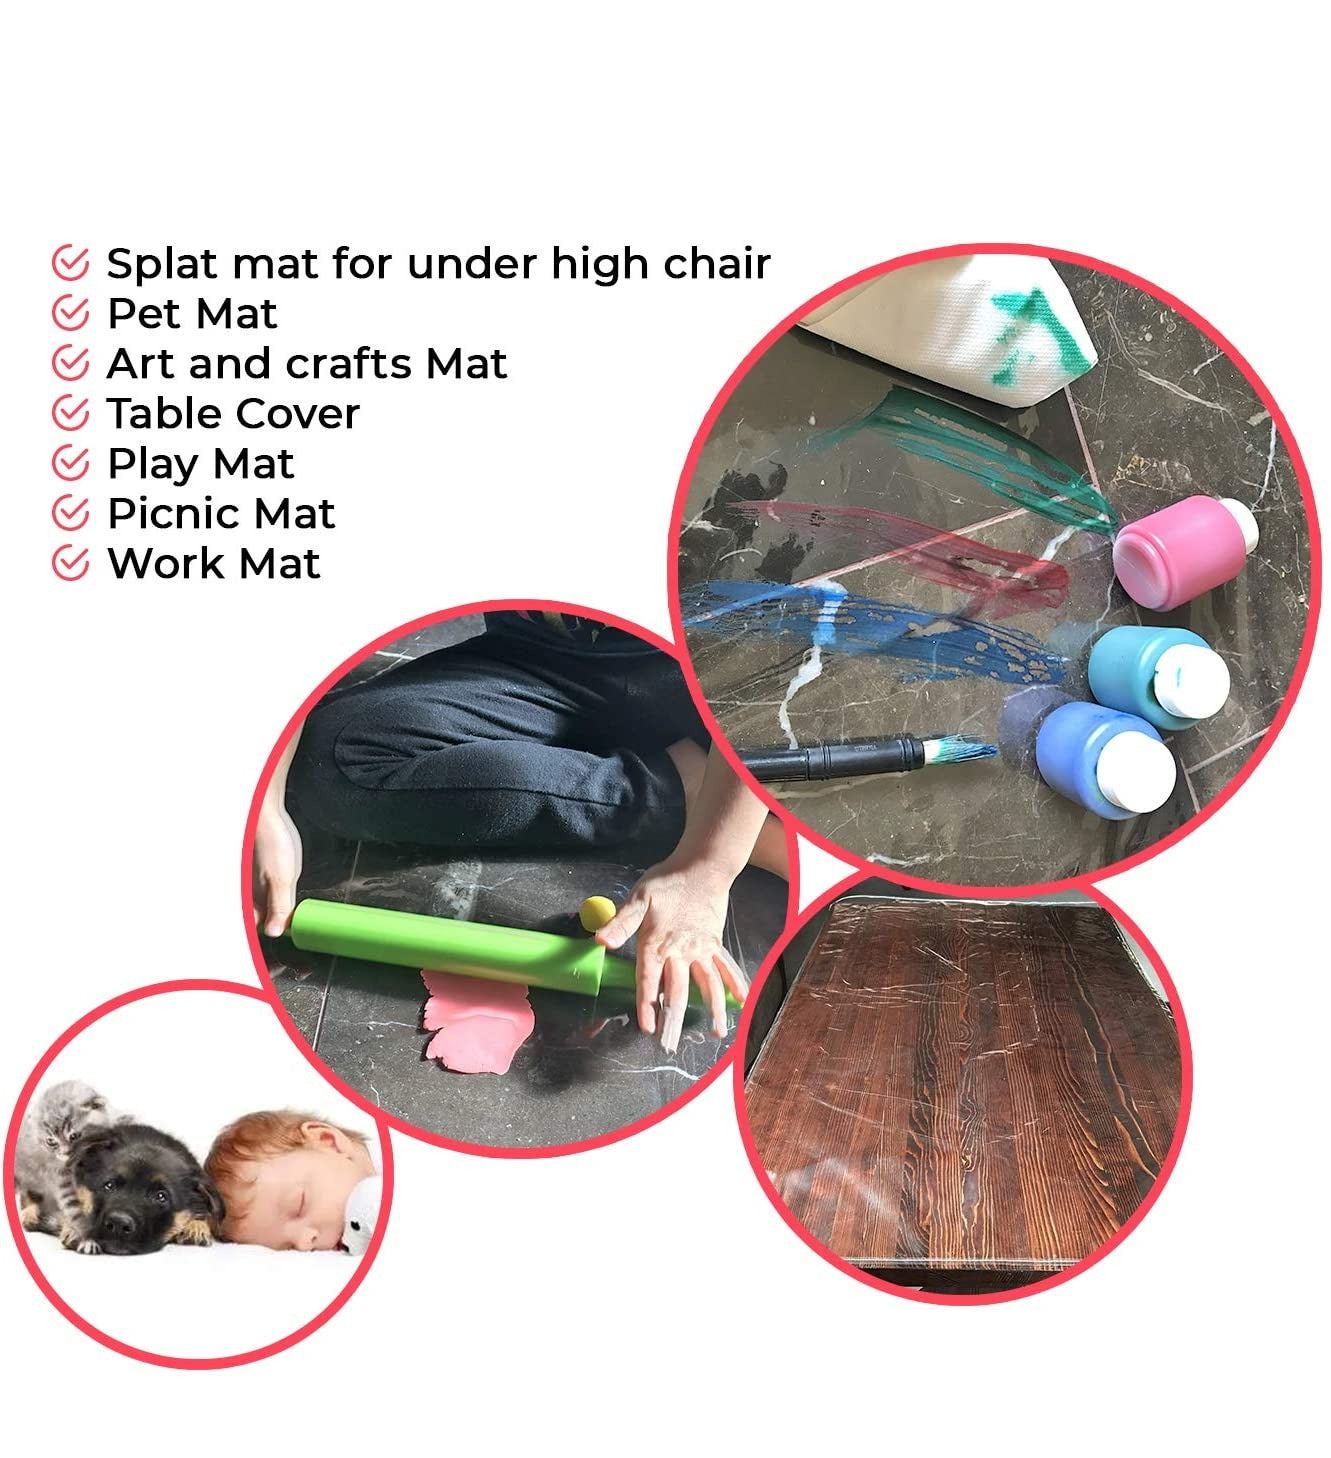 Splat Mat For Under High Chair (Plastic Round)